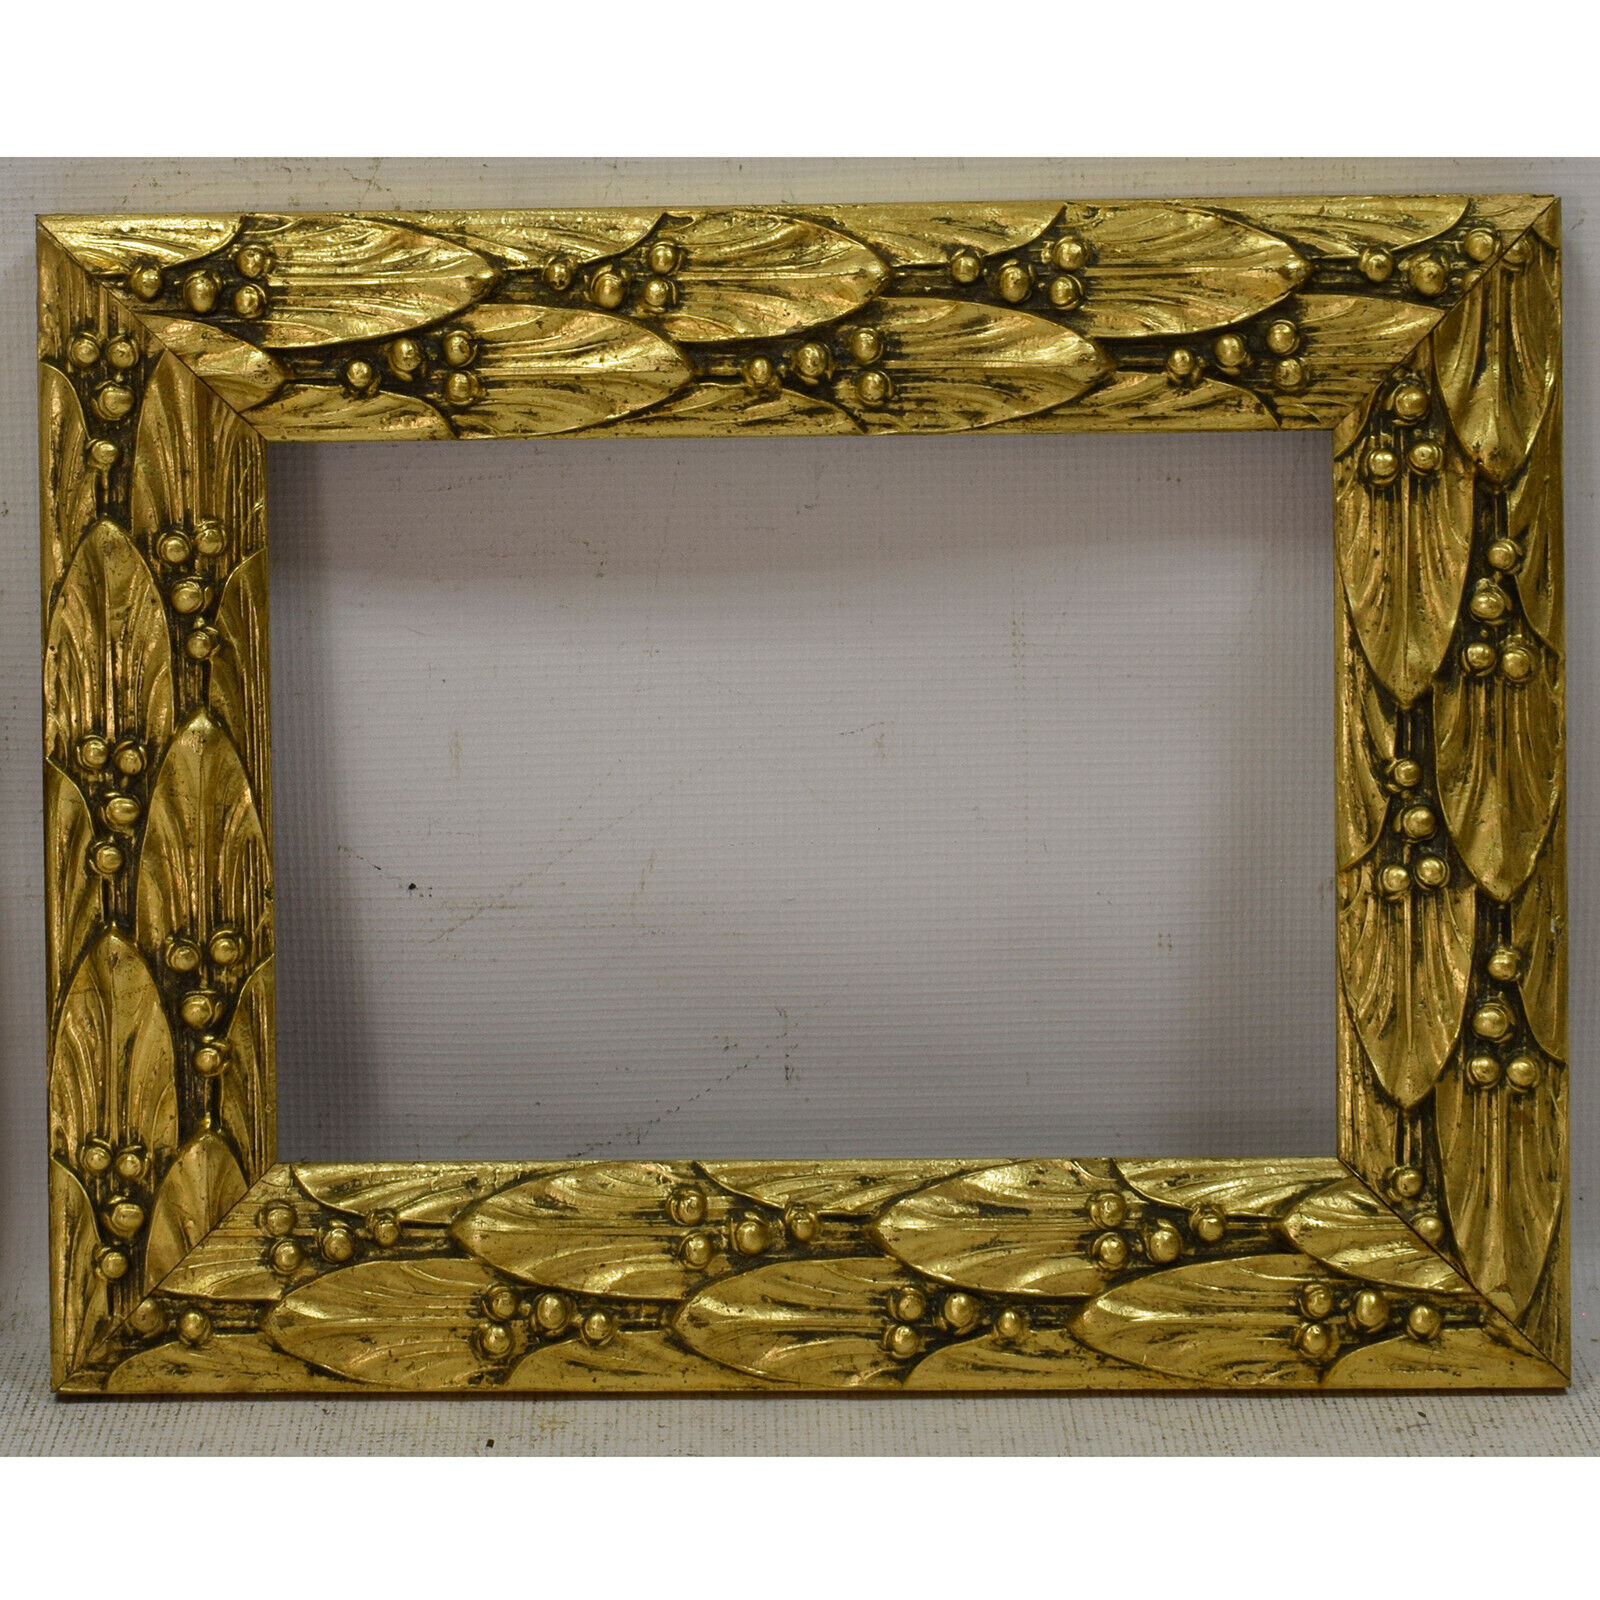 Ca 1900-1920 Old wooden frame decorative Original Internal: 11,8x8,2 in